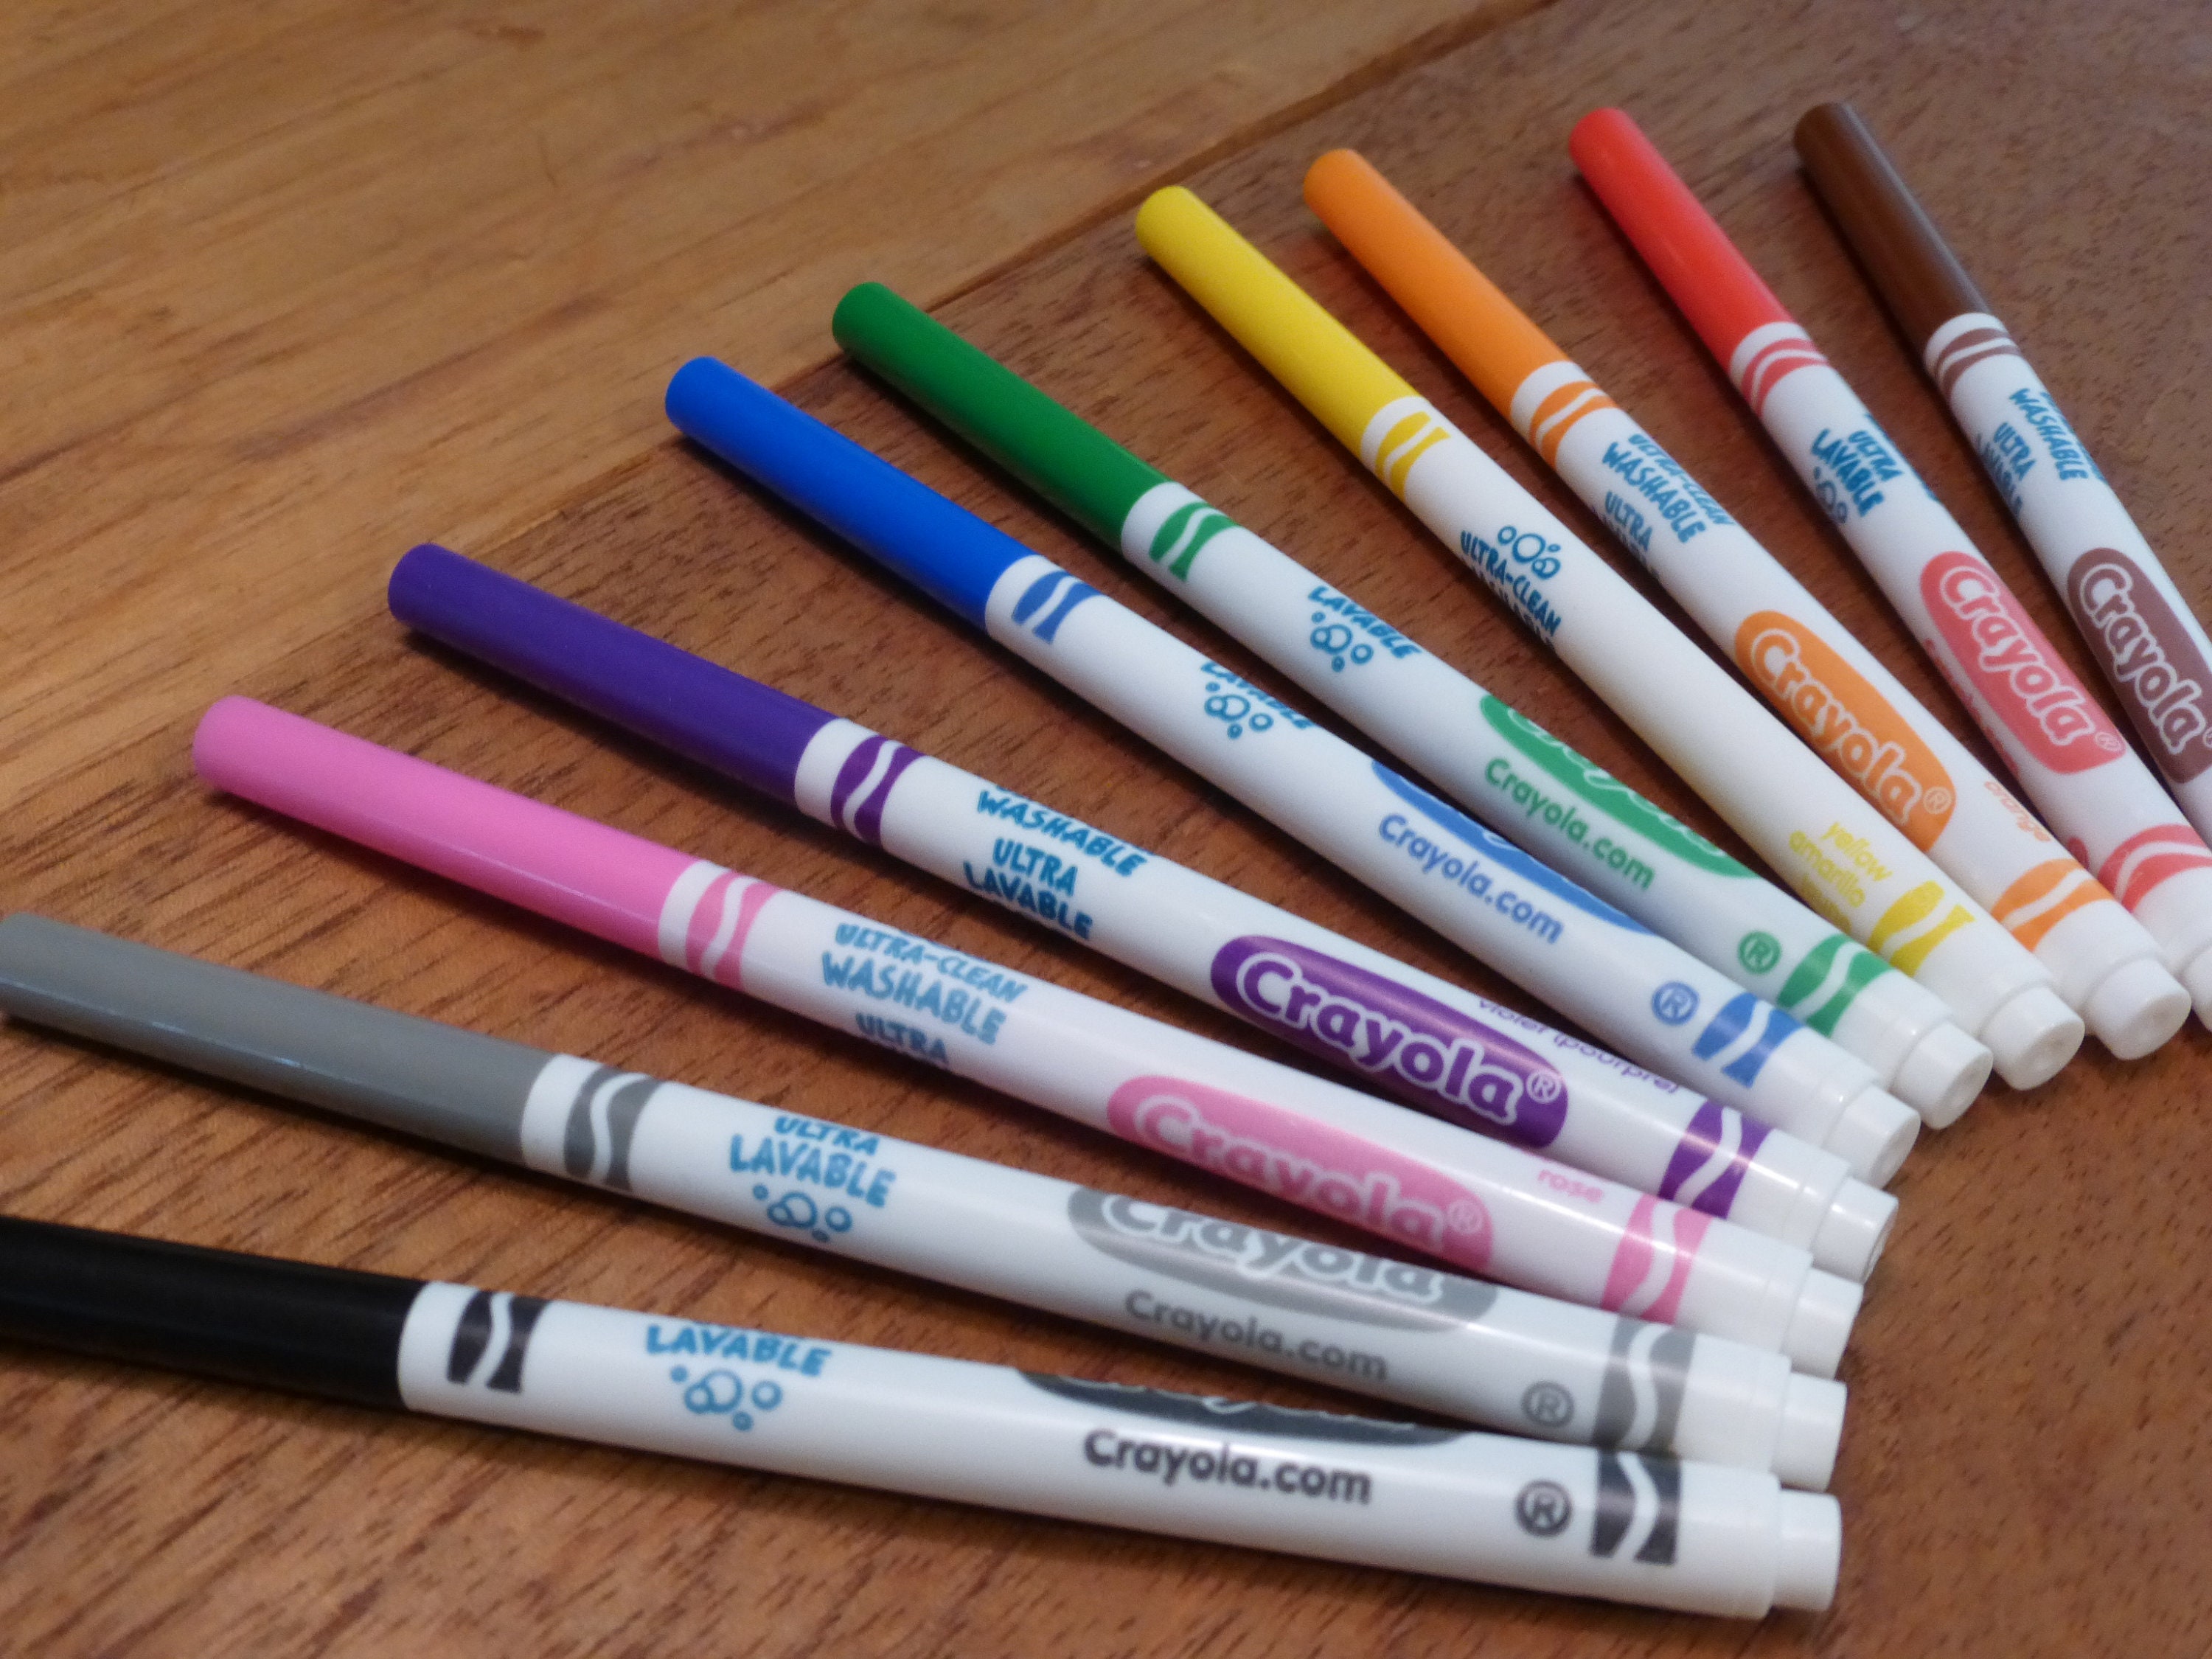 Crayola 8 Washable Crayons, Set of Crayons, Fine Line, Washable